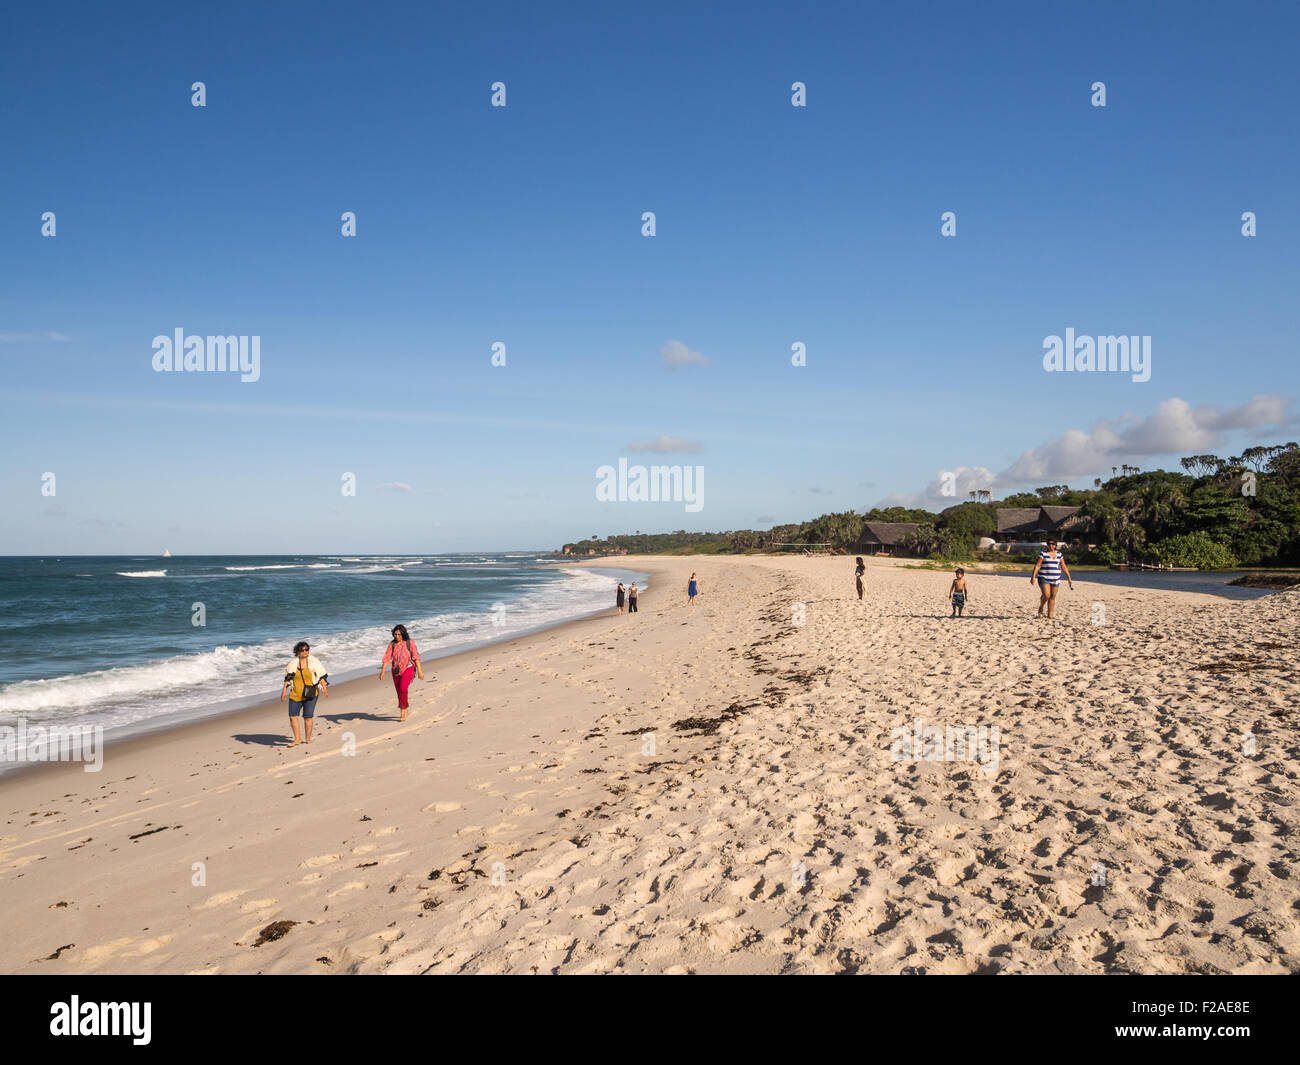 People walking on the Kutani beach in Dar es Salaam, Tanzania, on a sunny day. Stock Photo